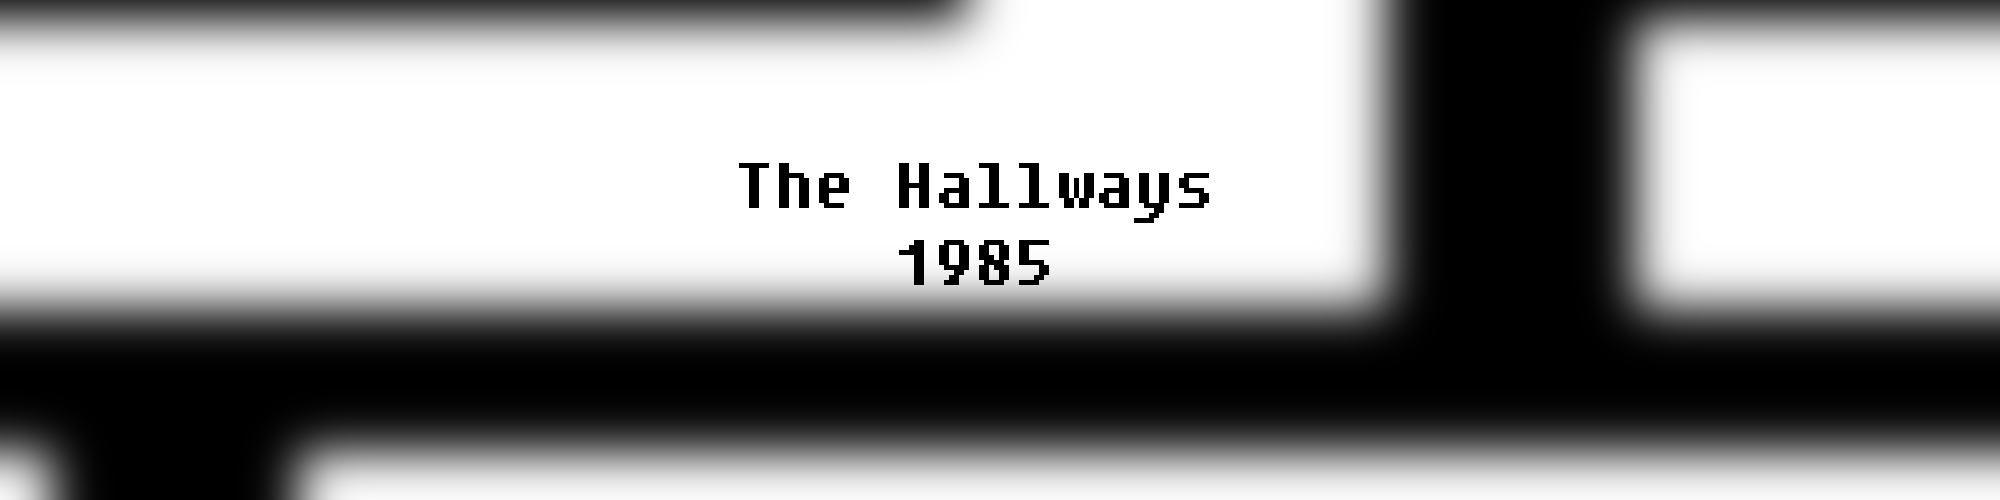 The Hallways 1985